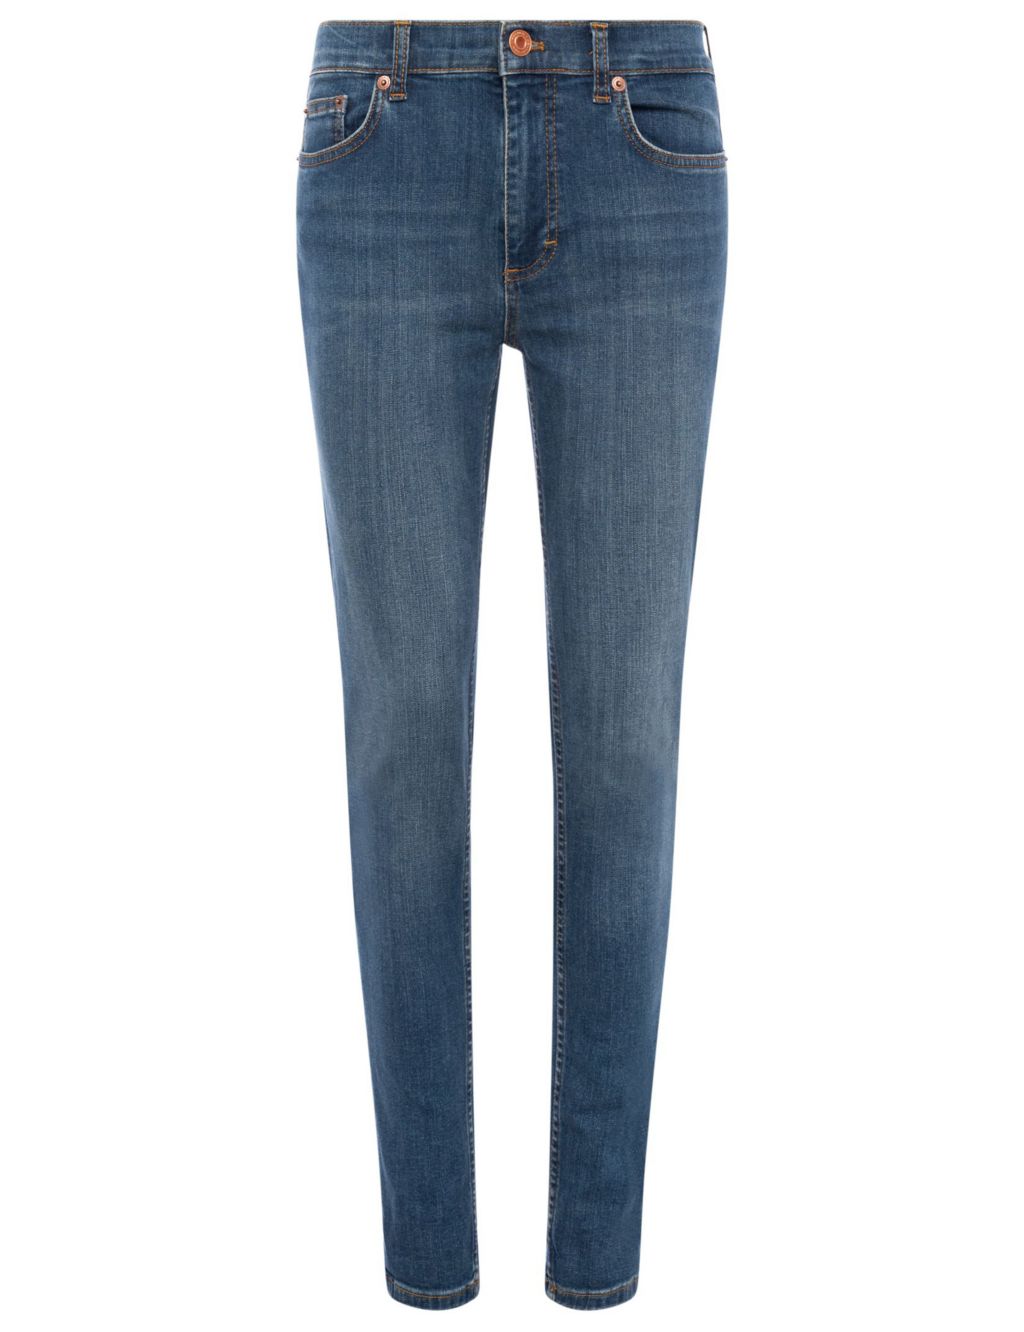 Skinny Ankle Grazer Jeans image 2